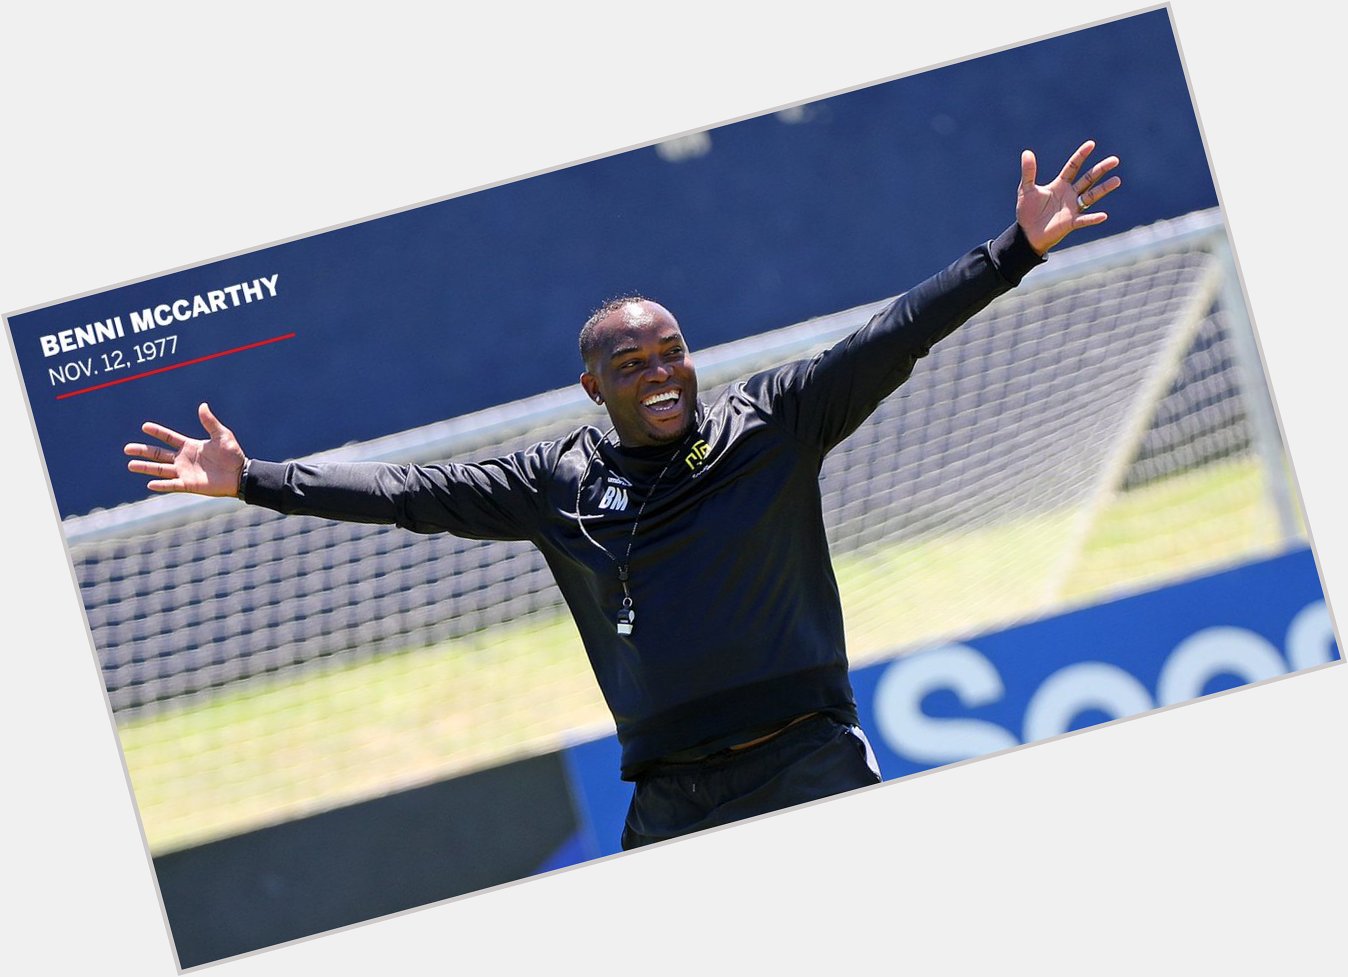 Happy birthday to former Bafana Bafana star and current coach Benni McCarthy. 